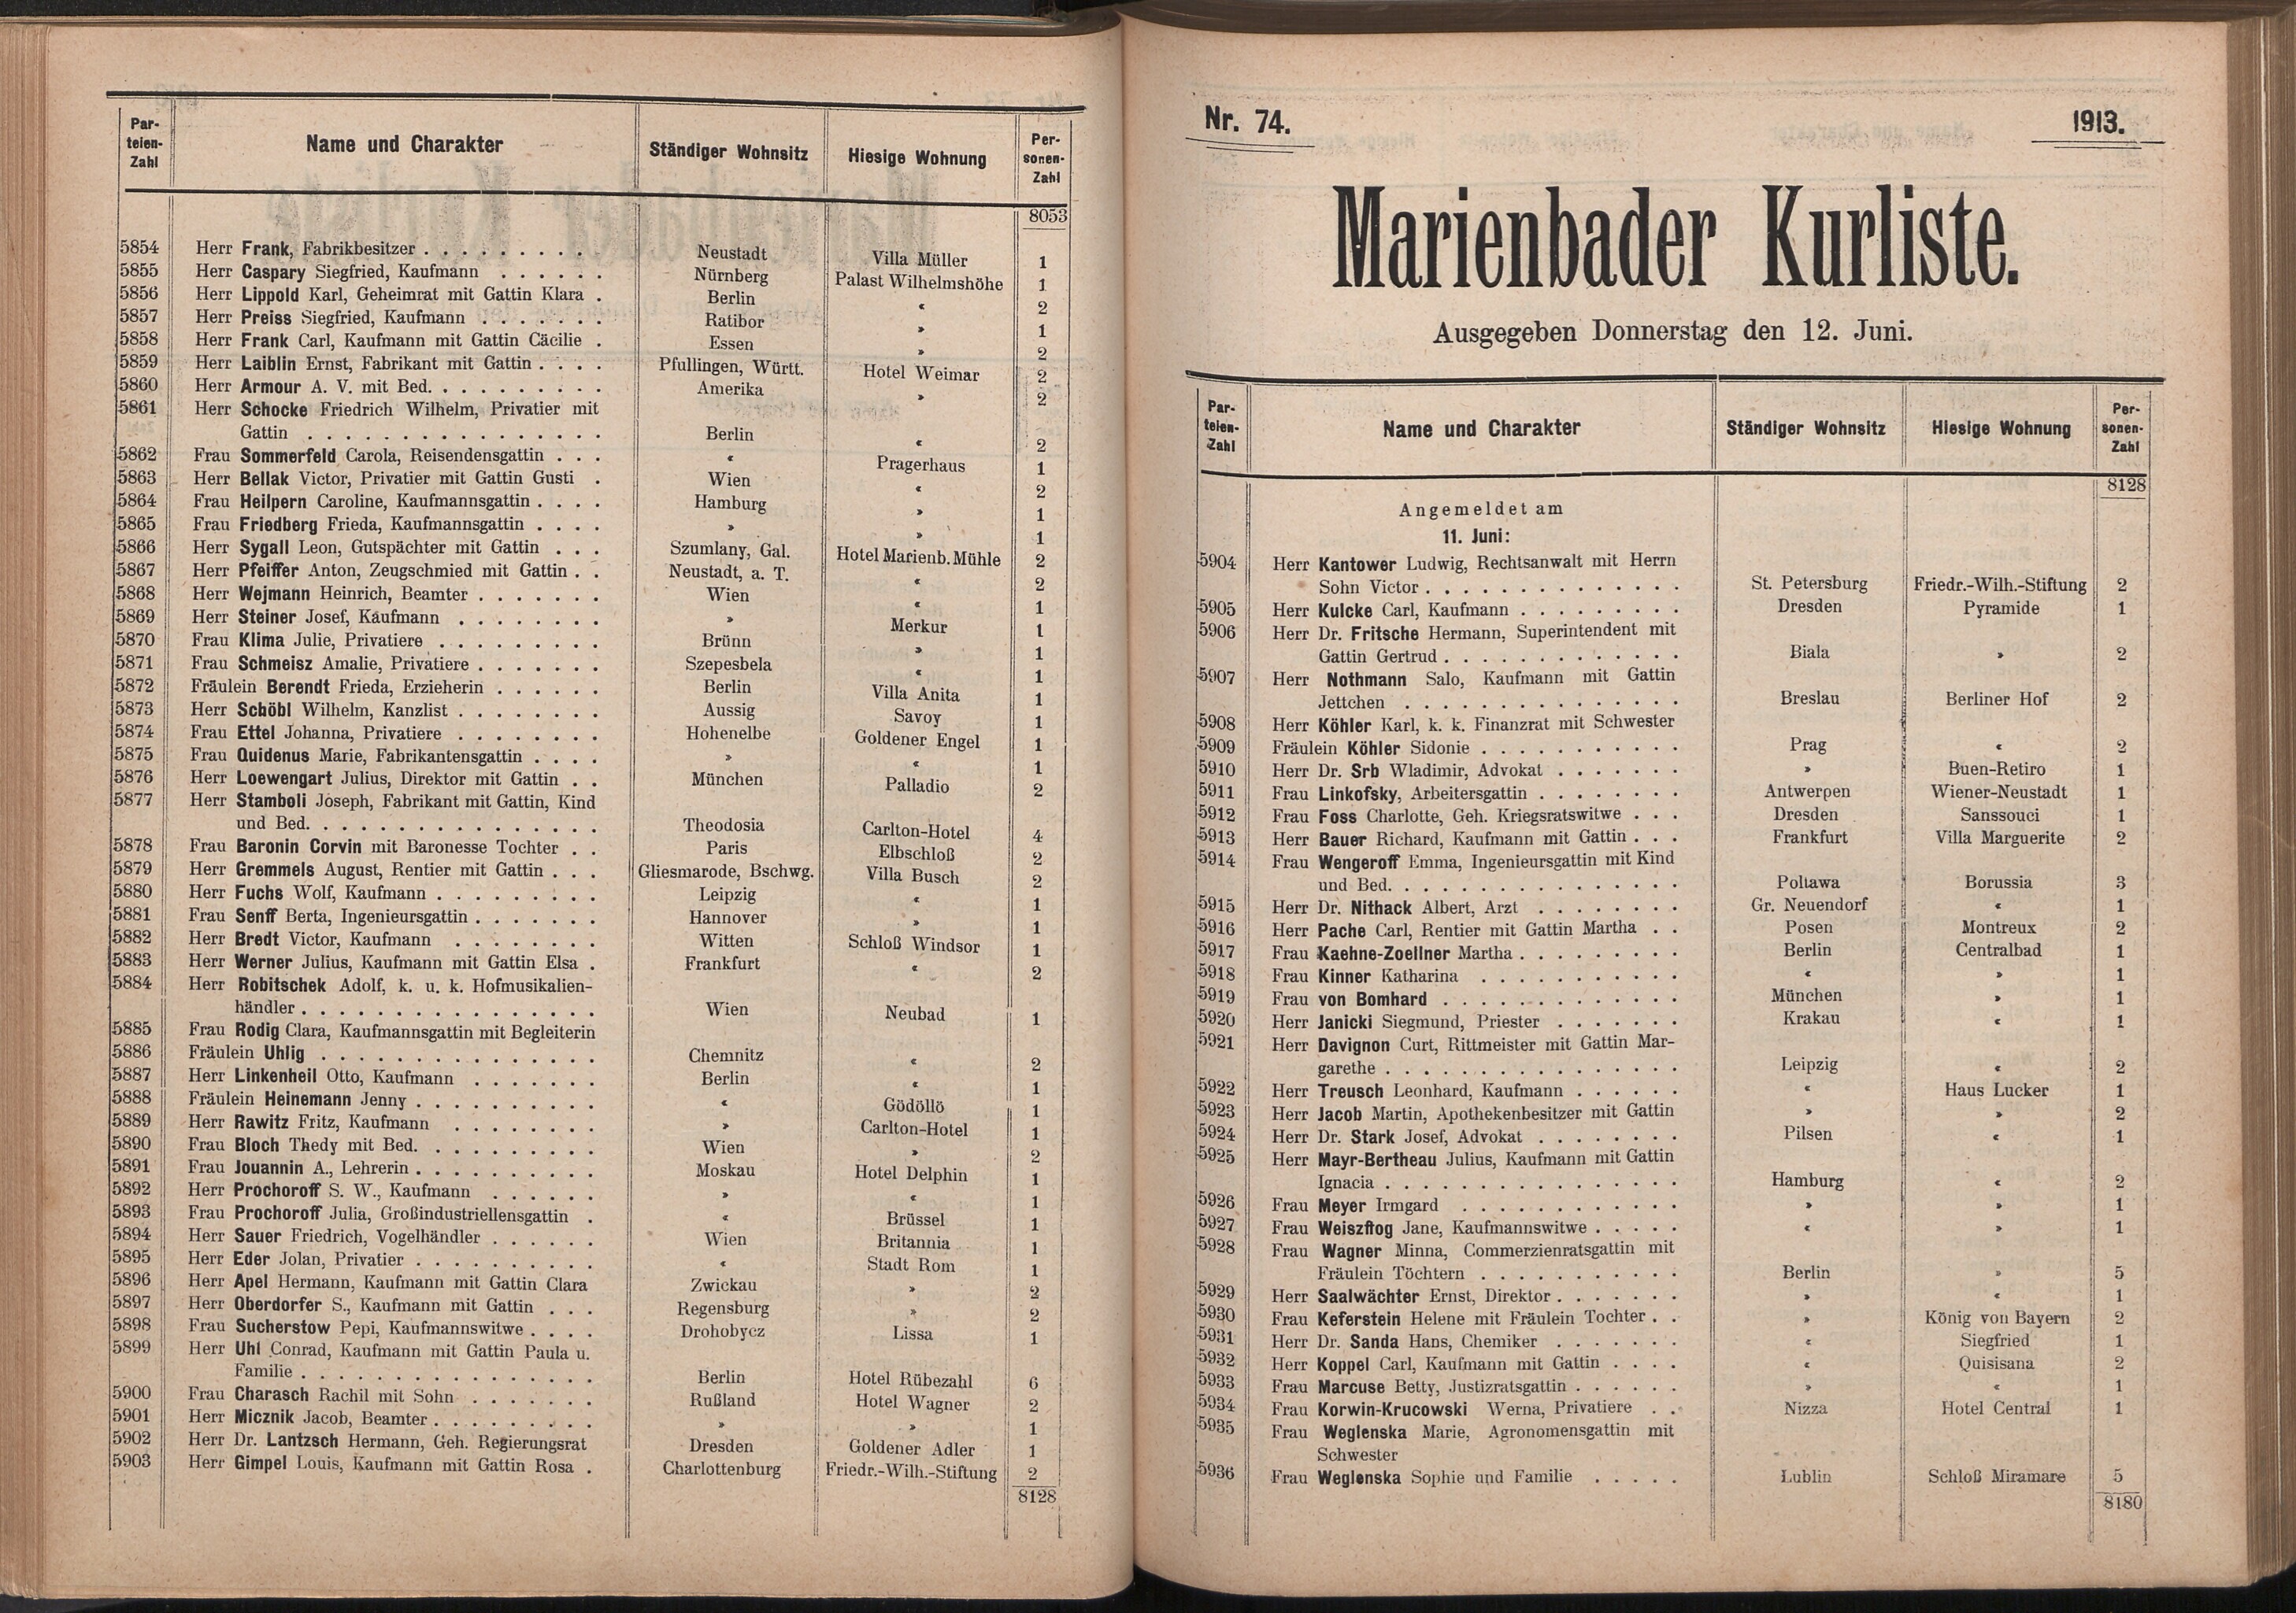 91. soap-ch_knihovna_marienbader-kurliste-1913_0910